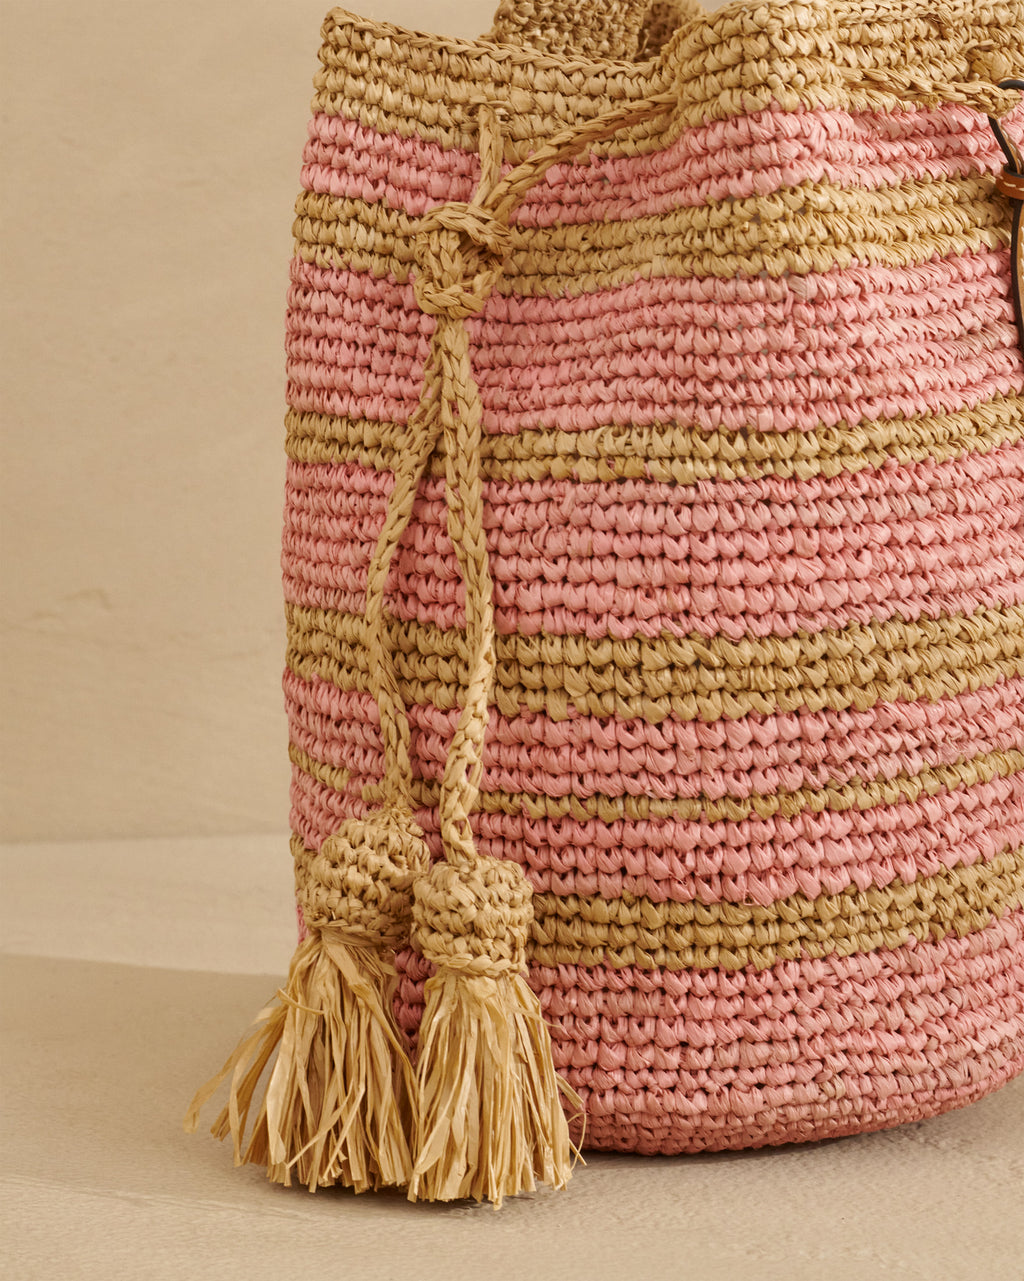 Raffia Beach Bucket - Palm Leather Tag - Tan And Pink Stripes